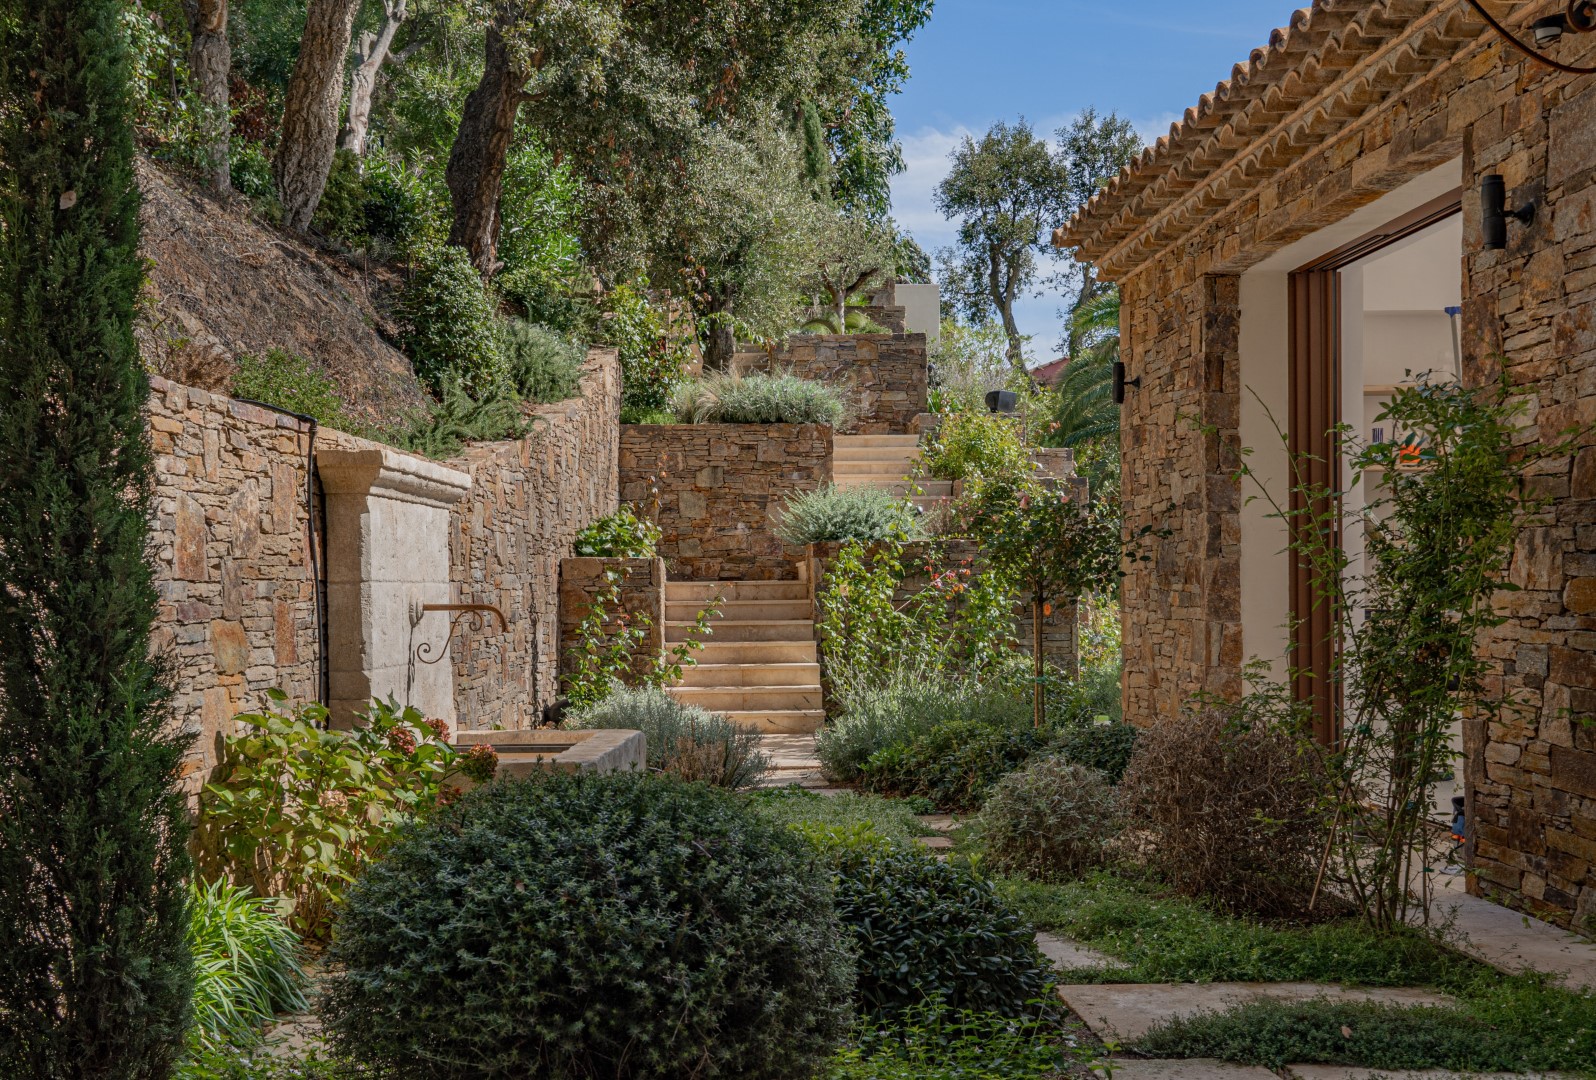 15 Fantastic Mediterranean Landscape Designs That Will Take Your Breath Away